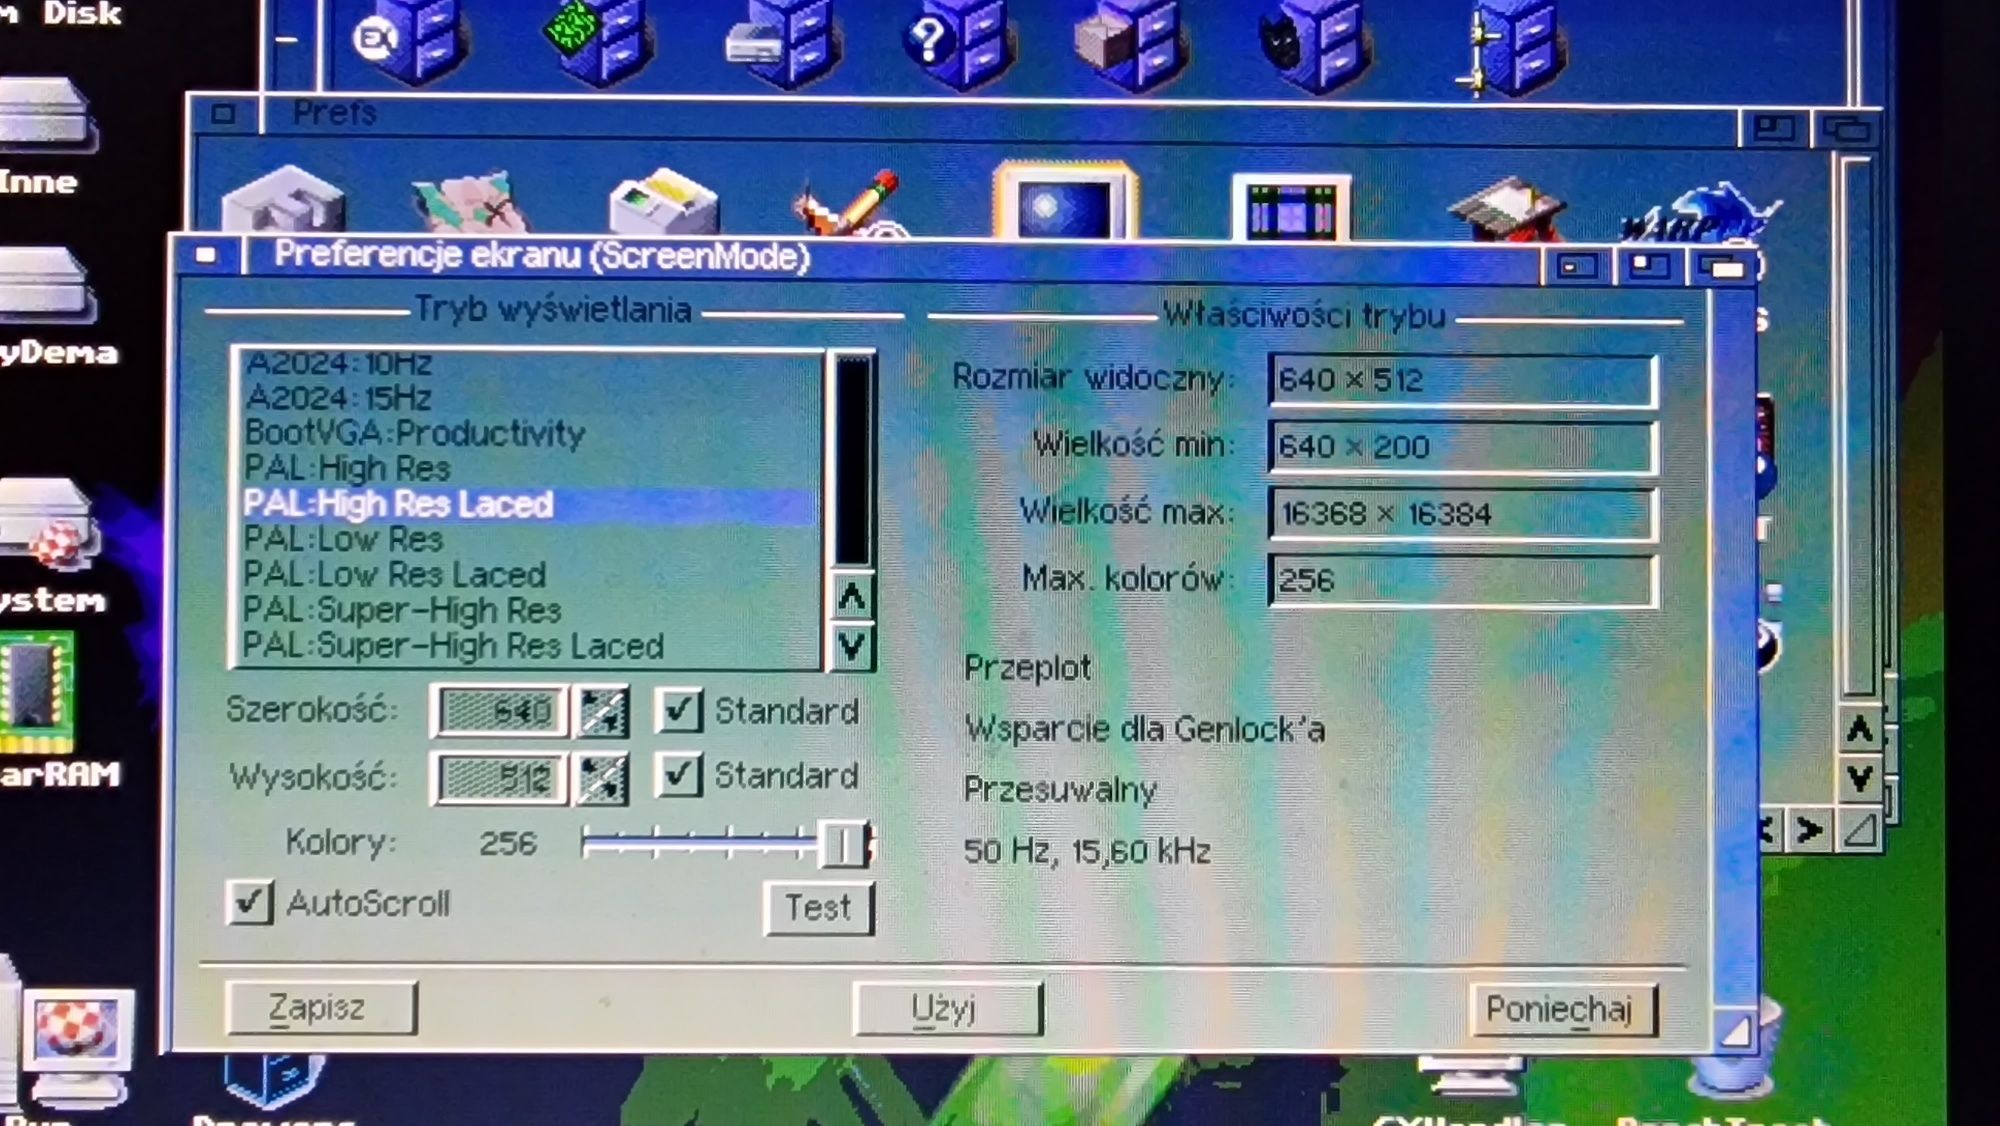 Amiga 1200 classicwb3.9 po polsku  karta cf 16 gb.